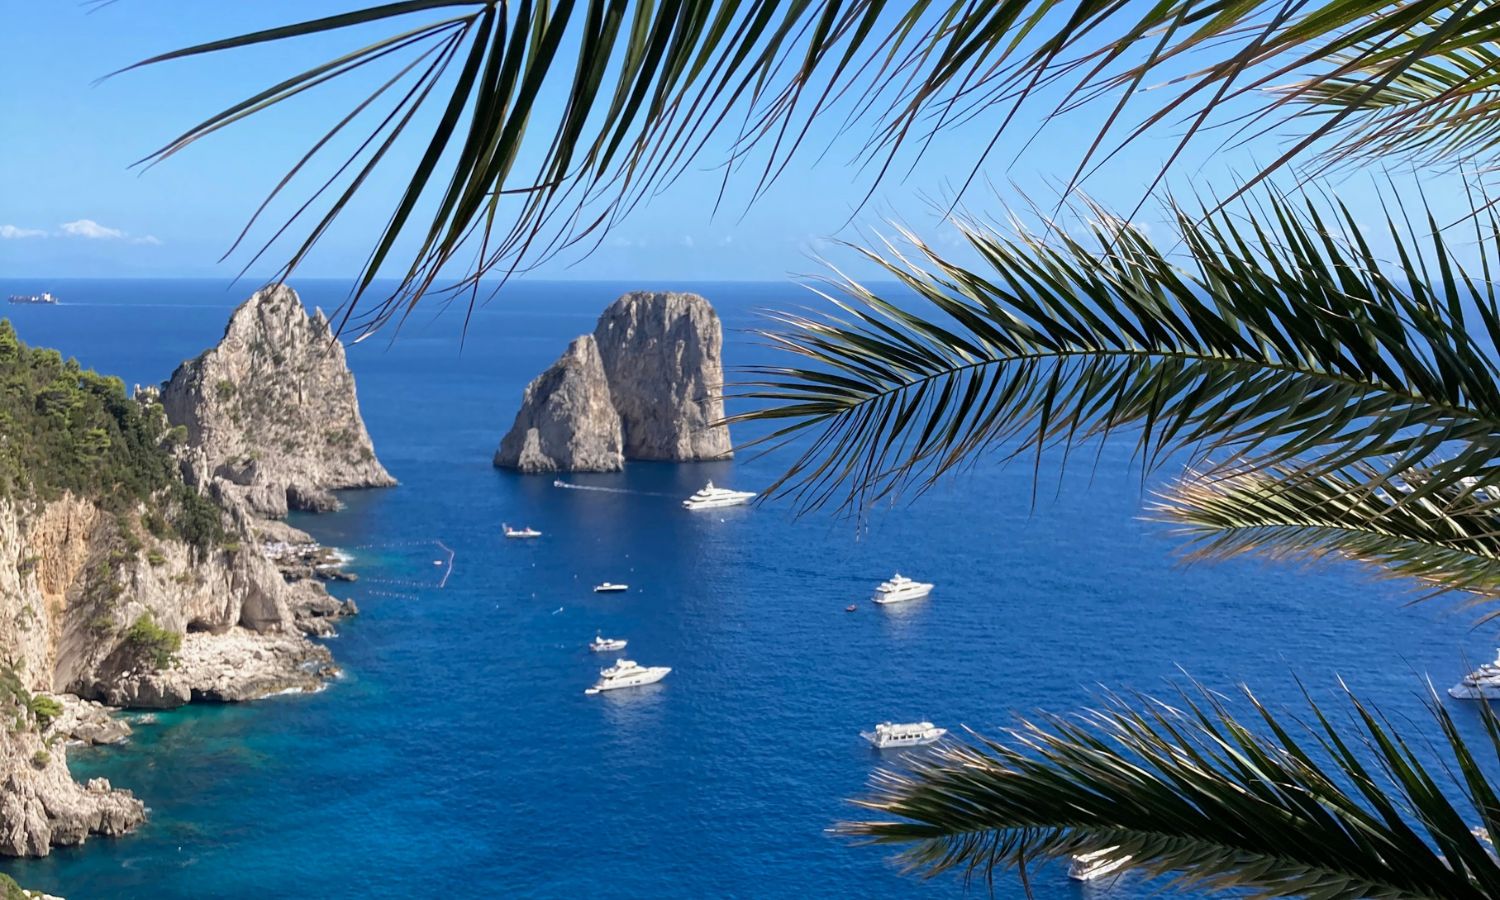 Capri Italy